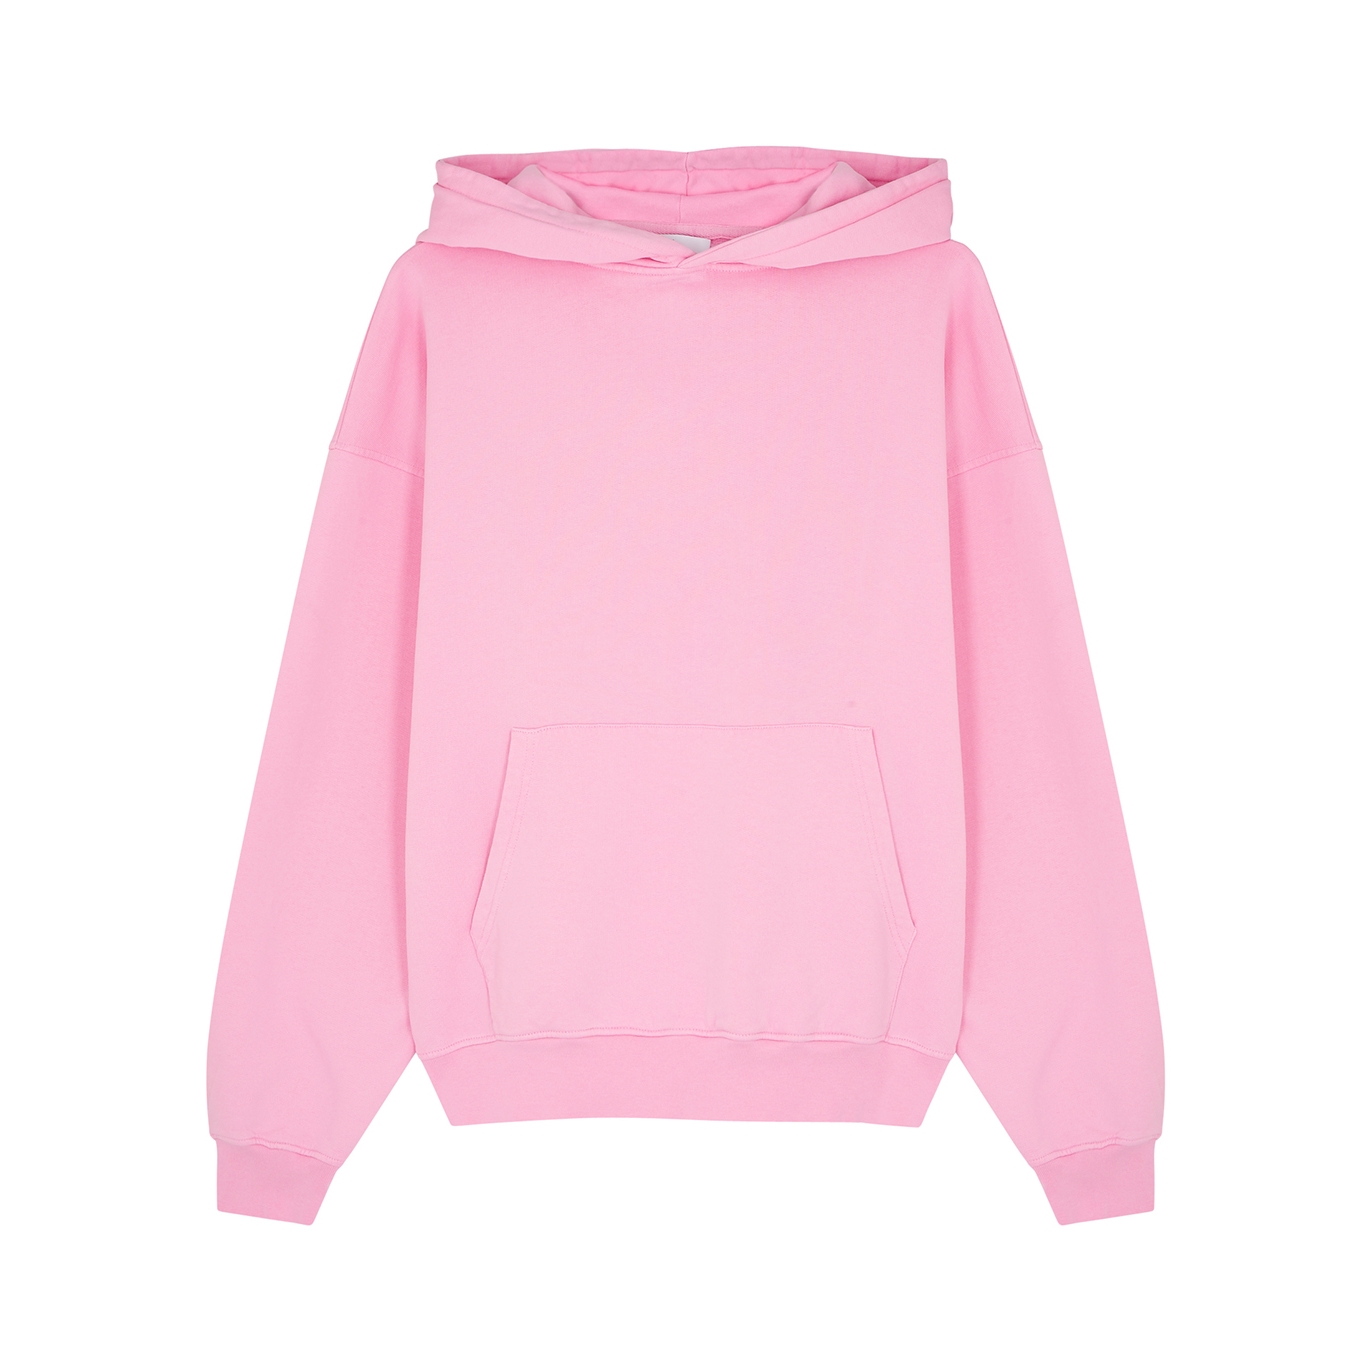 Colorful Standard Pink Hooded Cotton Sweatshirt - Light Pink - L